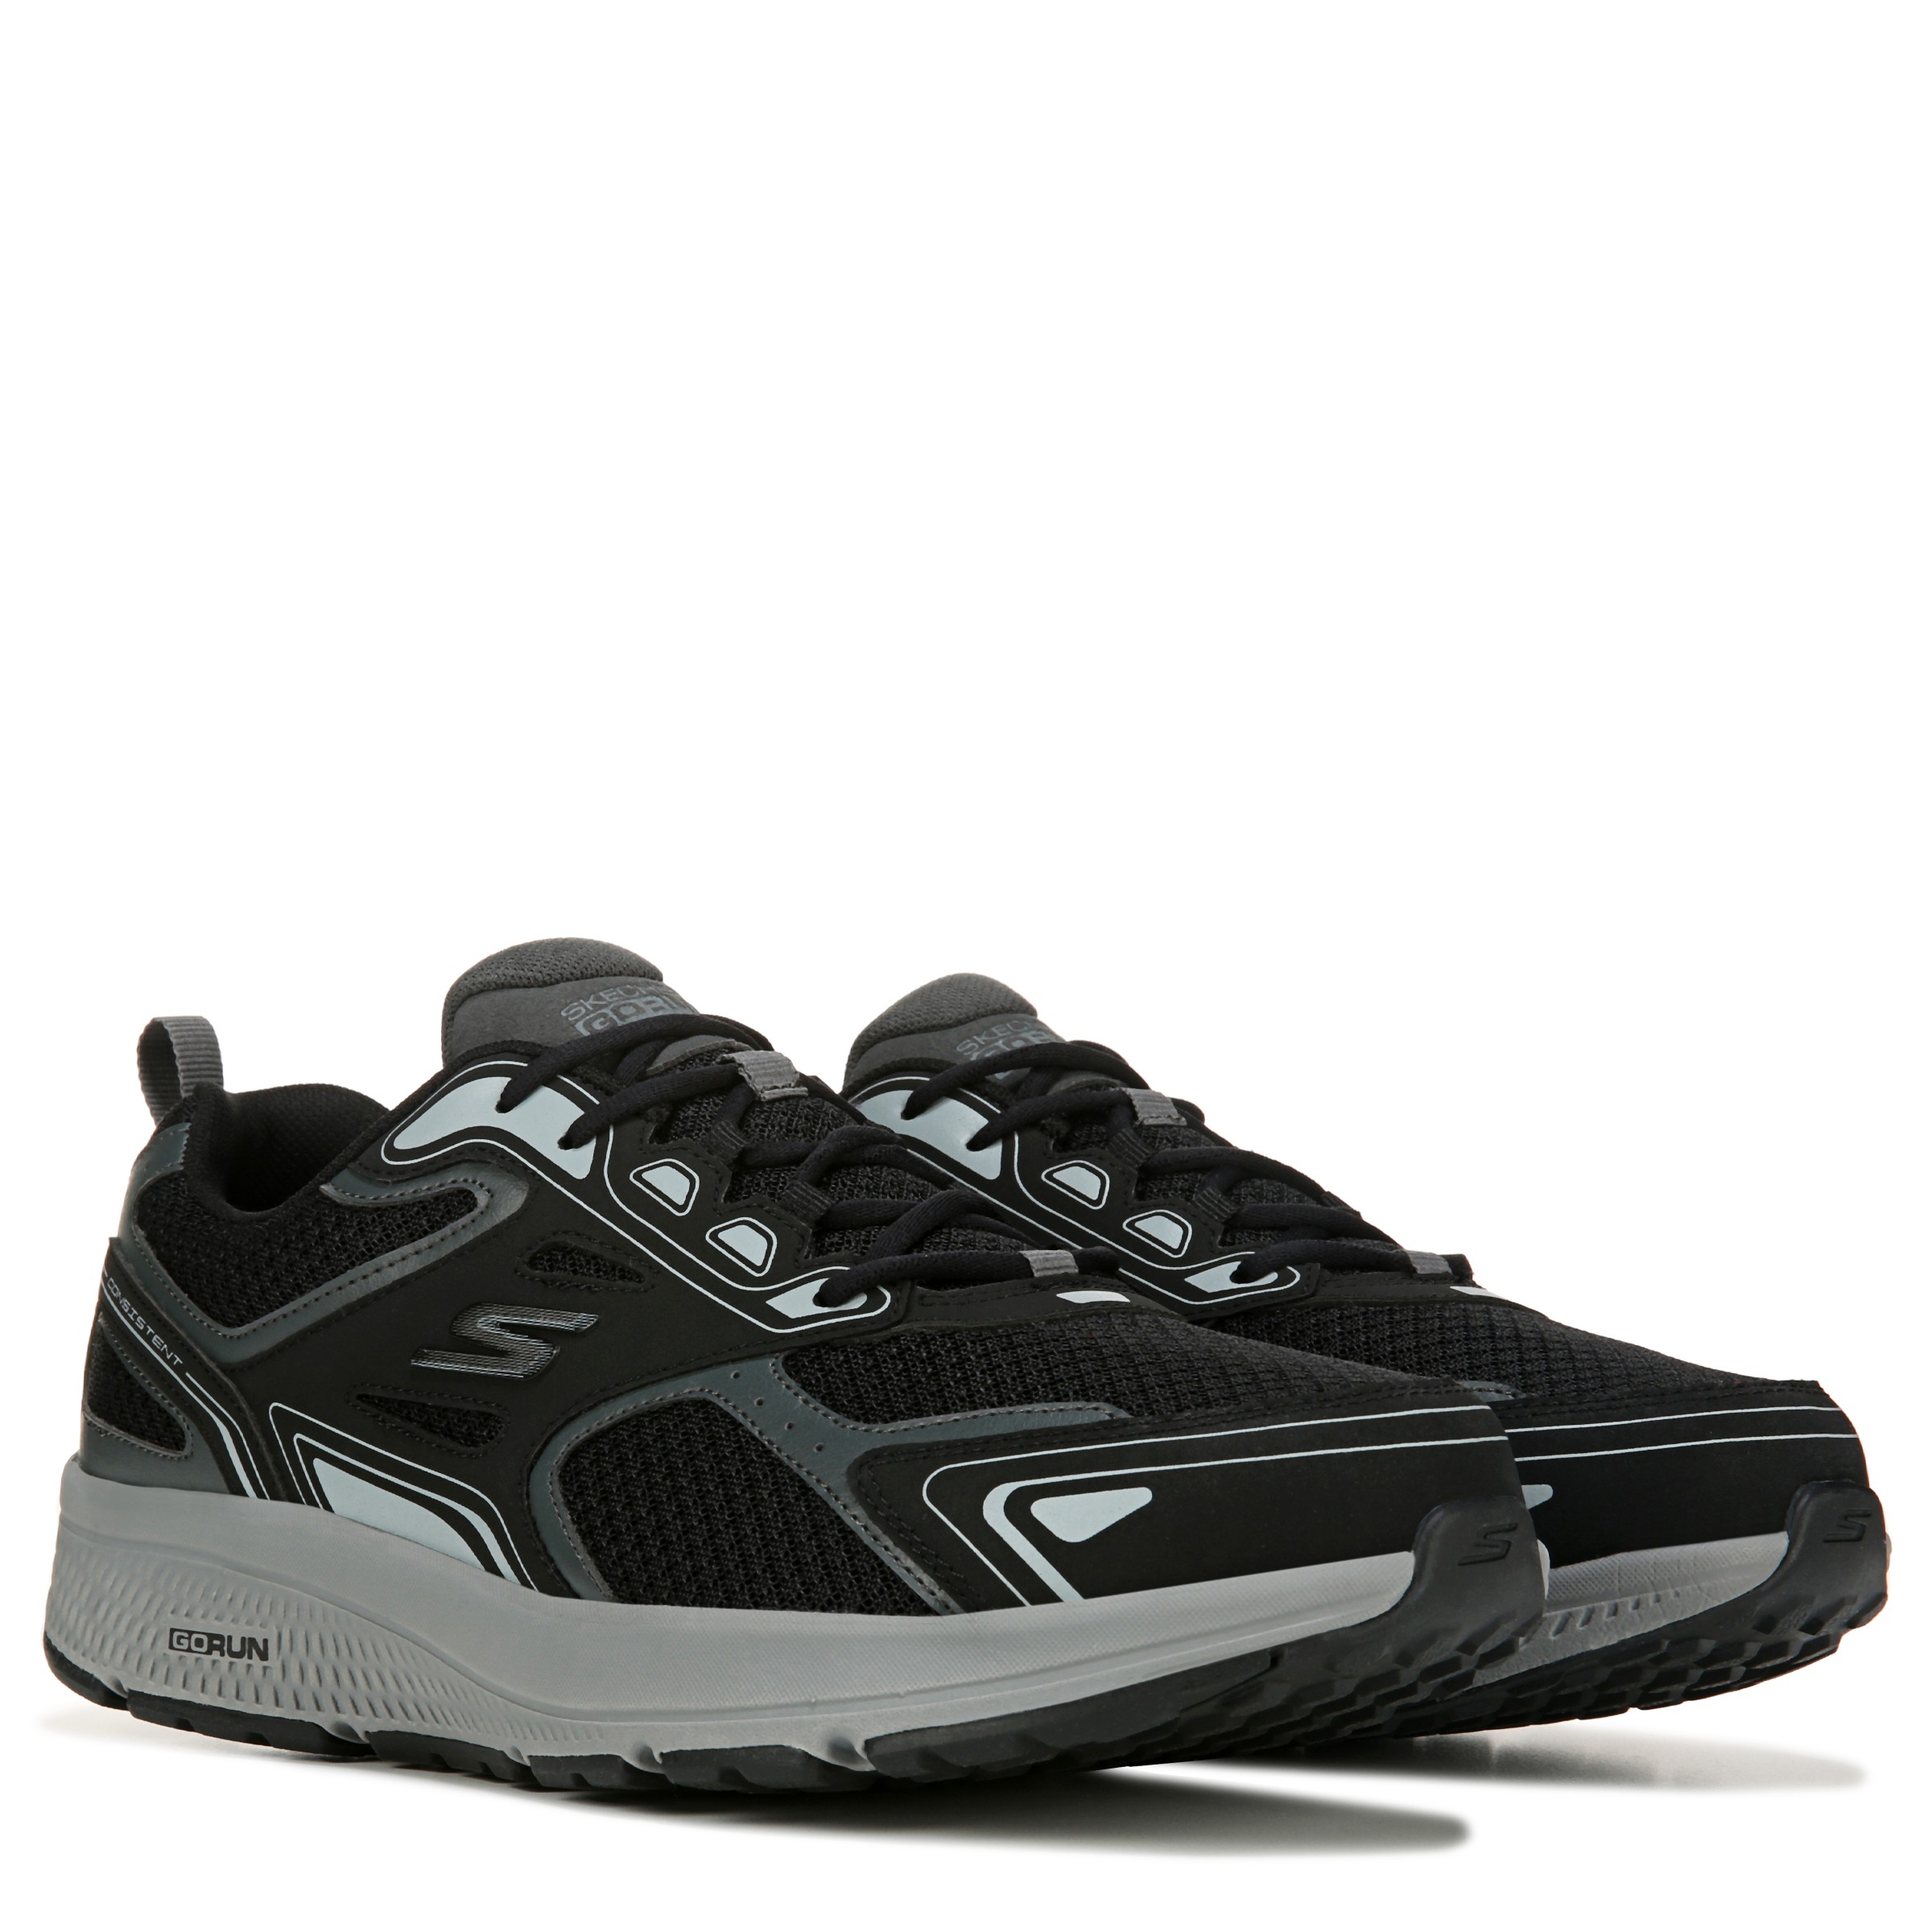  Skechers mens Go Run Consistent - Performance Running &  Walking Shoe Sneaker, Black/Grey, 7 X-Wide US